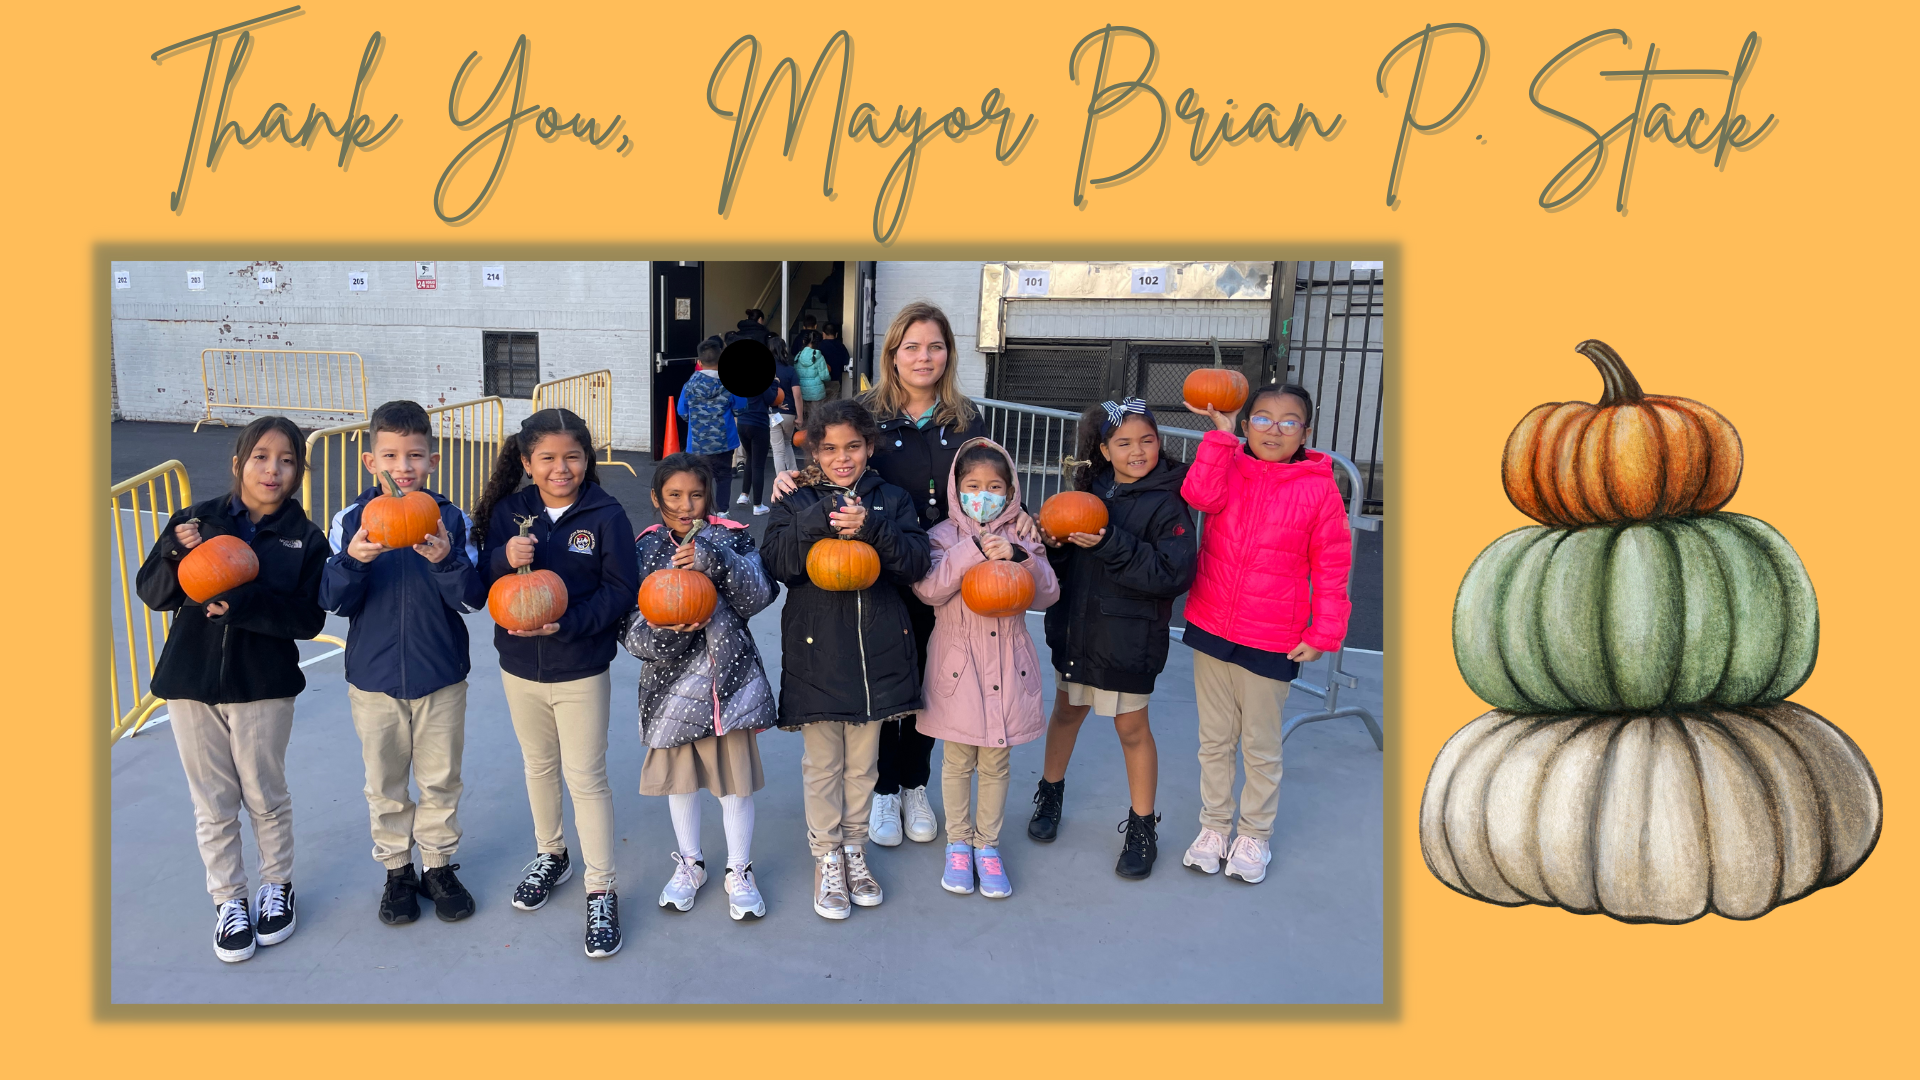 Students enjoying pumpkins and smiling